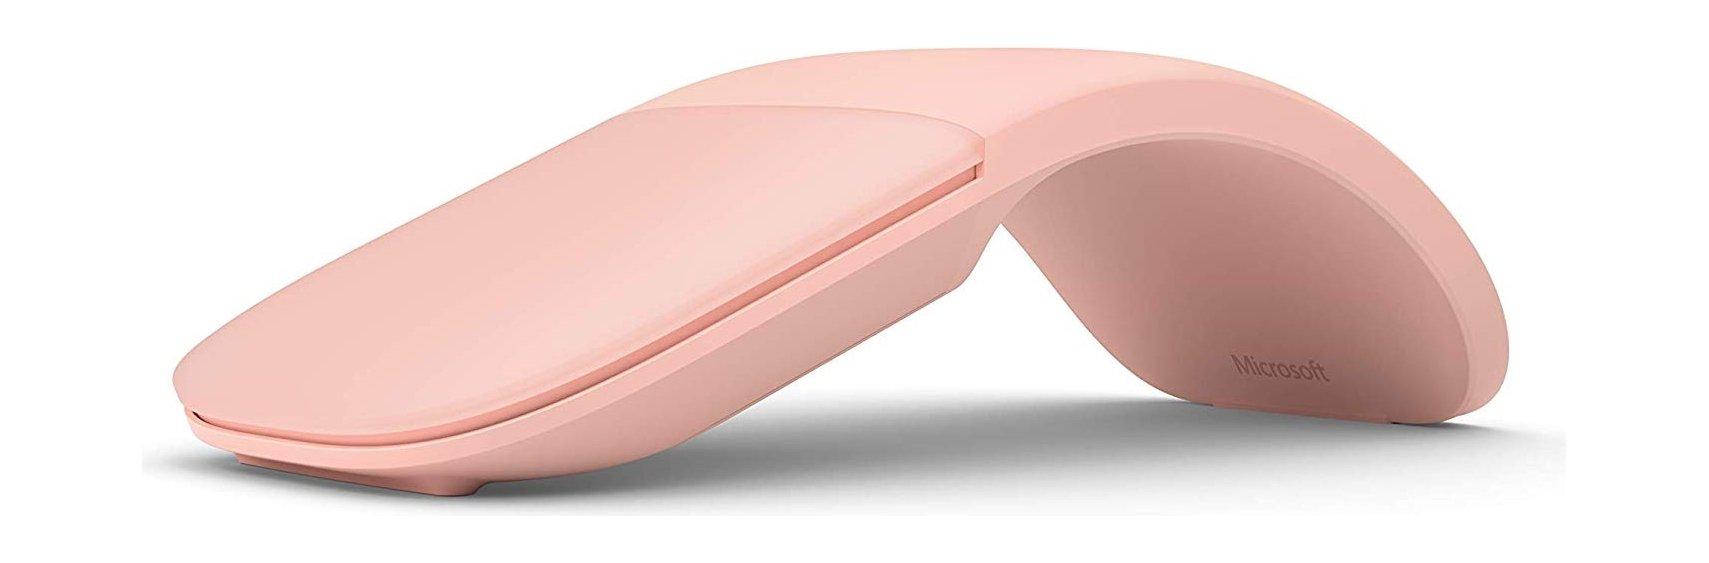 Buy Microsoft arc wireless mouse - pink in Saudi Arabia